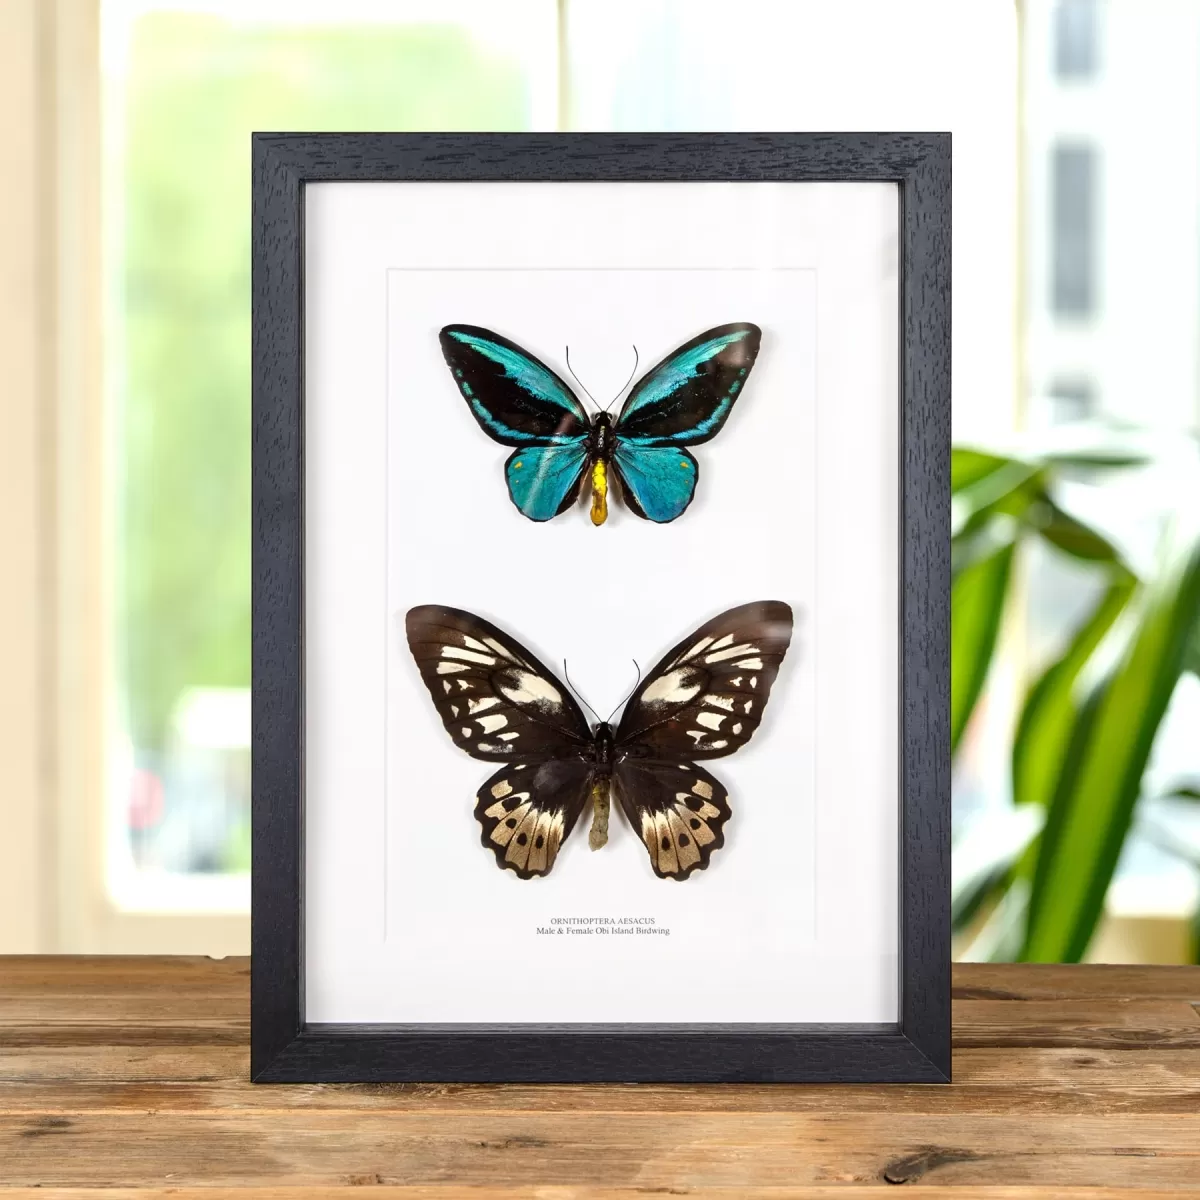 Minibeast Obi Island Birdwing Butterfly Male & Female Pair in Box Frame (Ornithoptera aesacus)